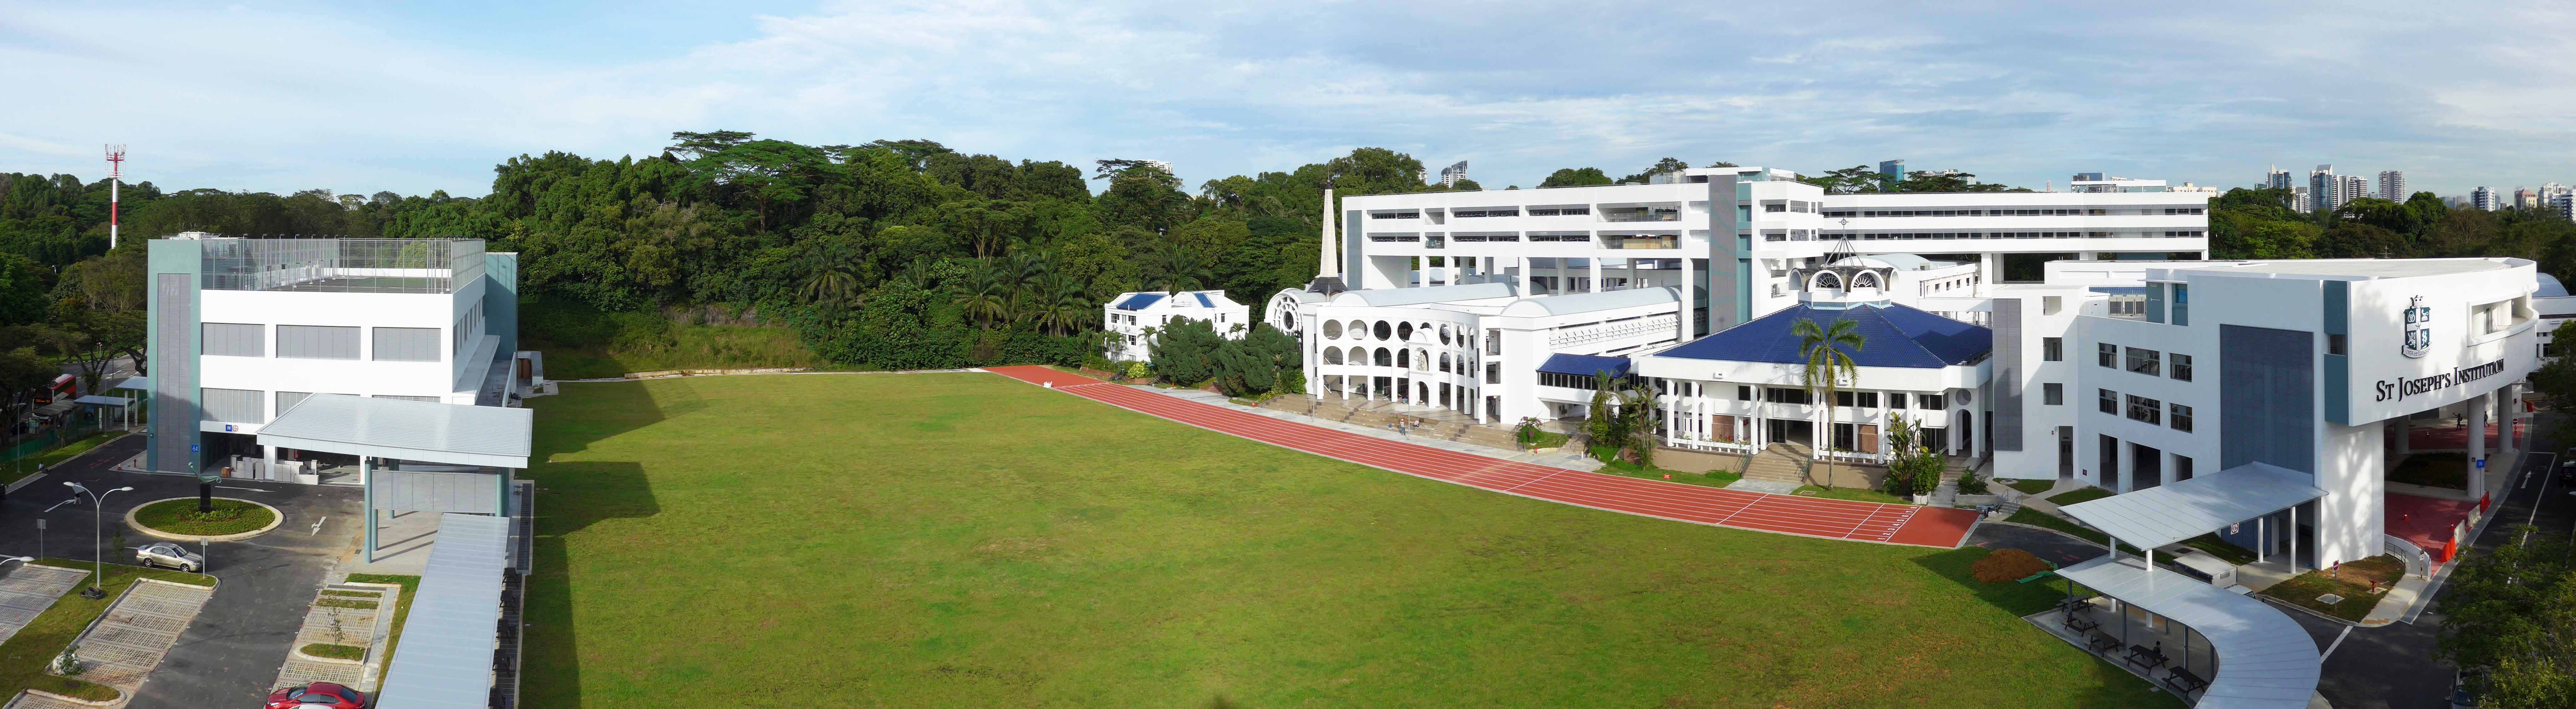 St Joseph's International School Singapore, SJI